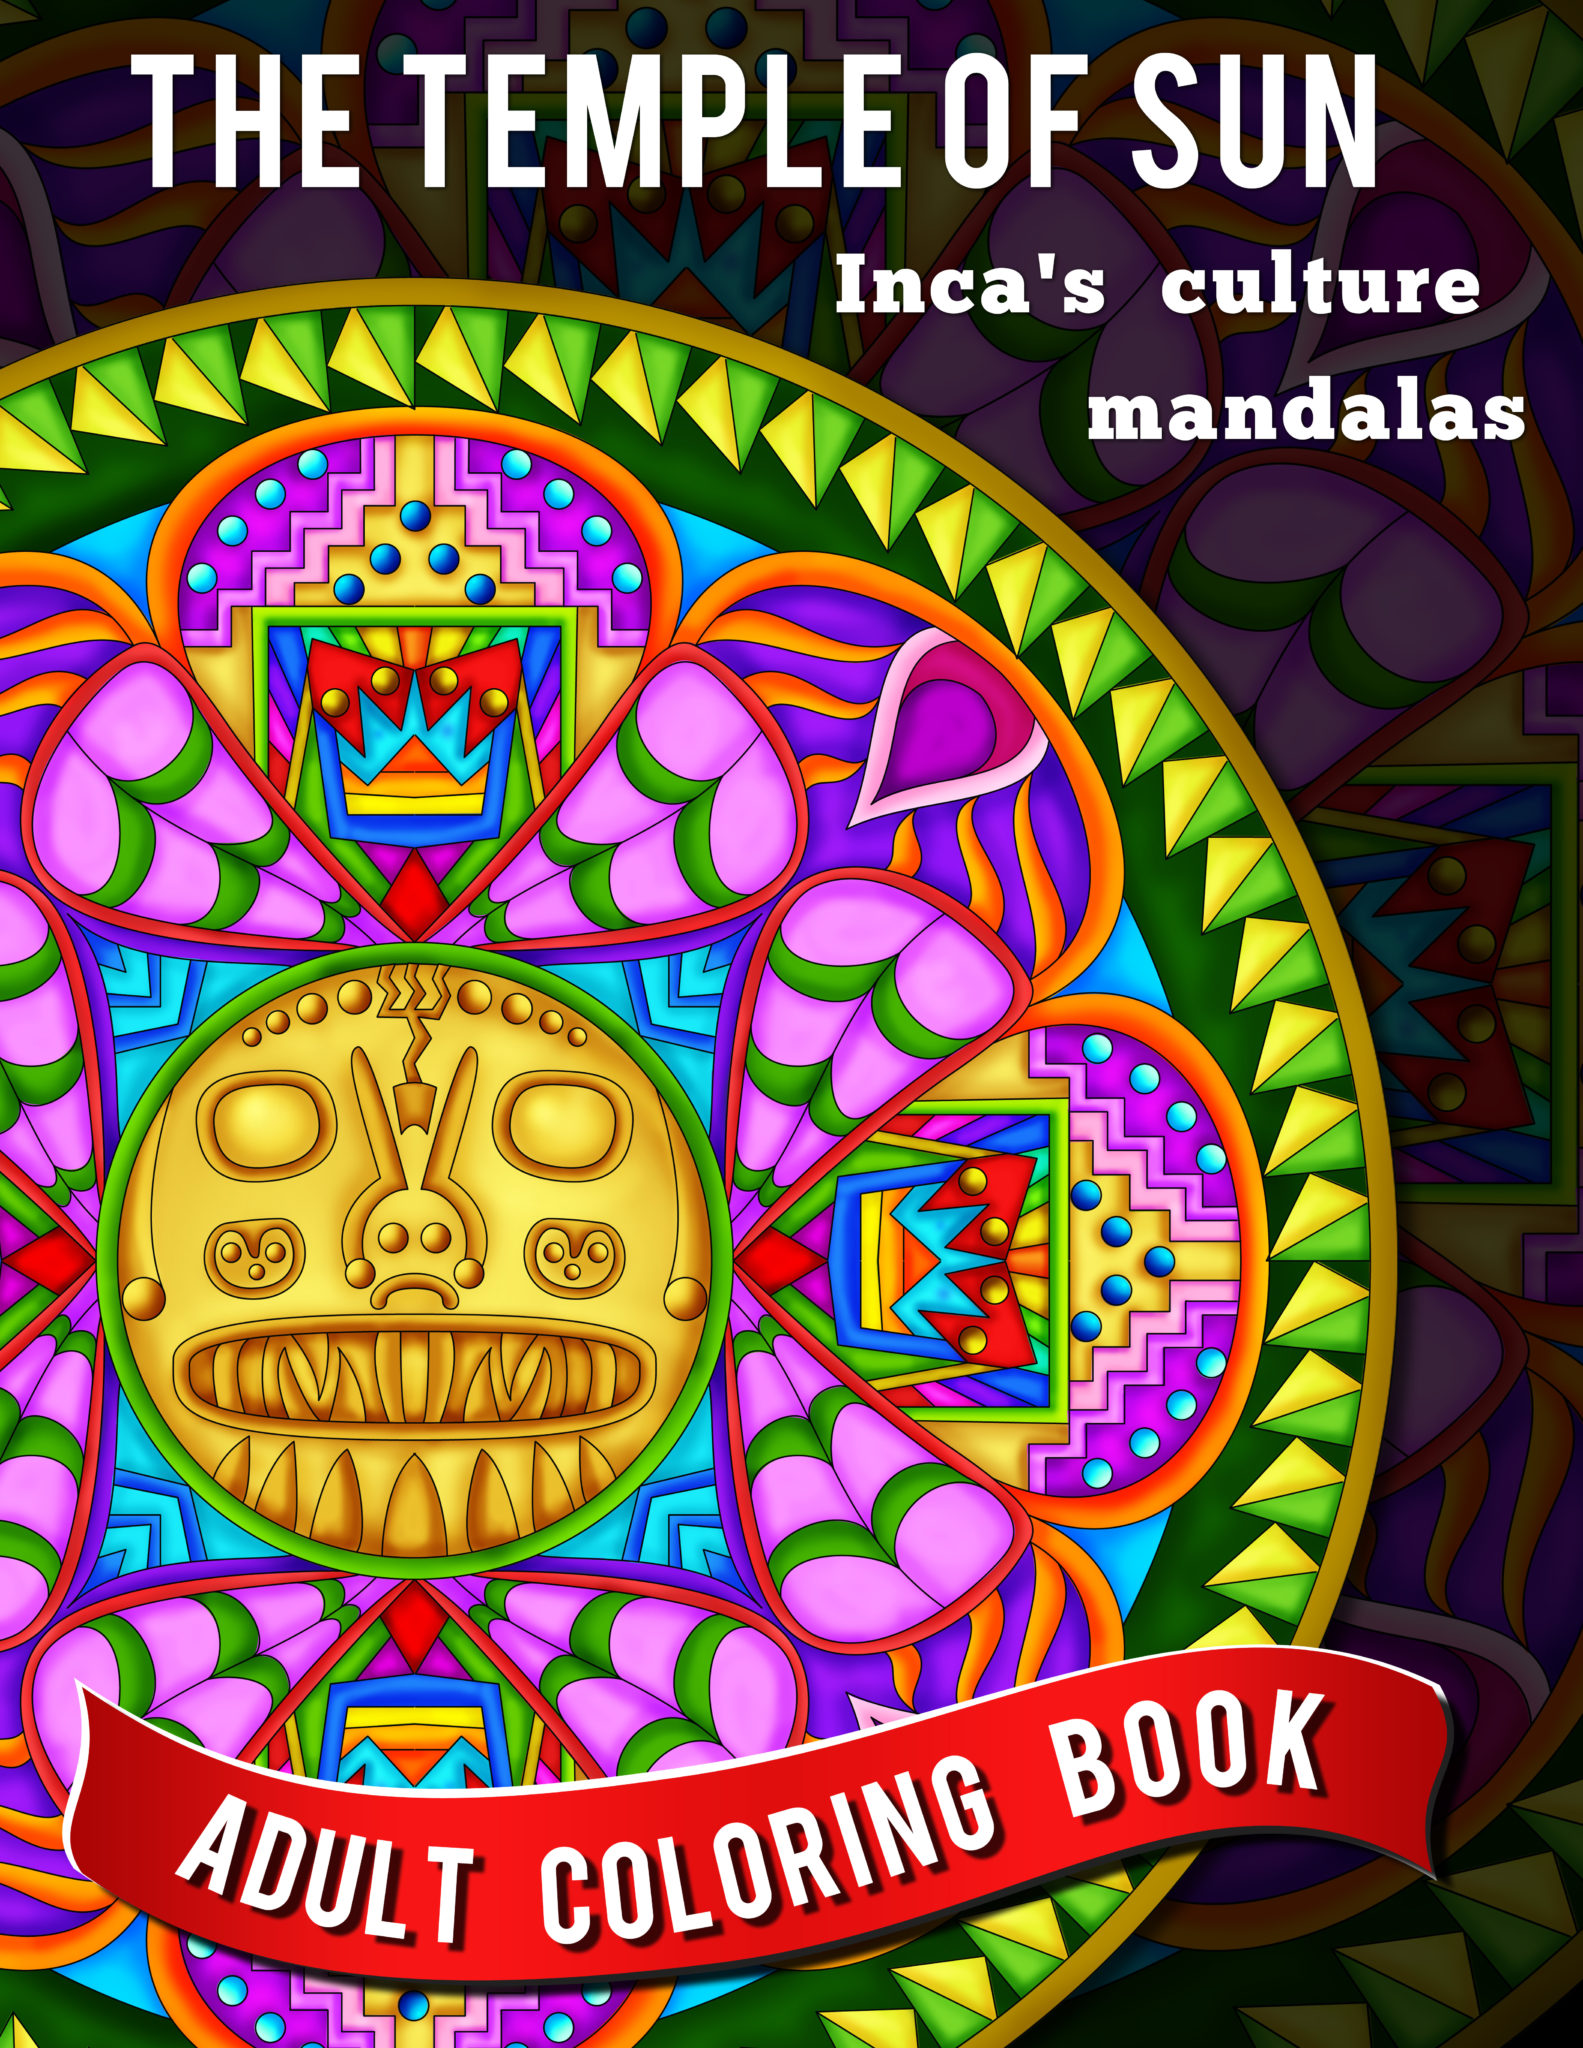 FREE: The Temple of Sun: Inca Culture Mandalas by Luis Felipe Mujica